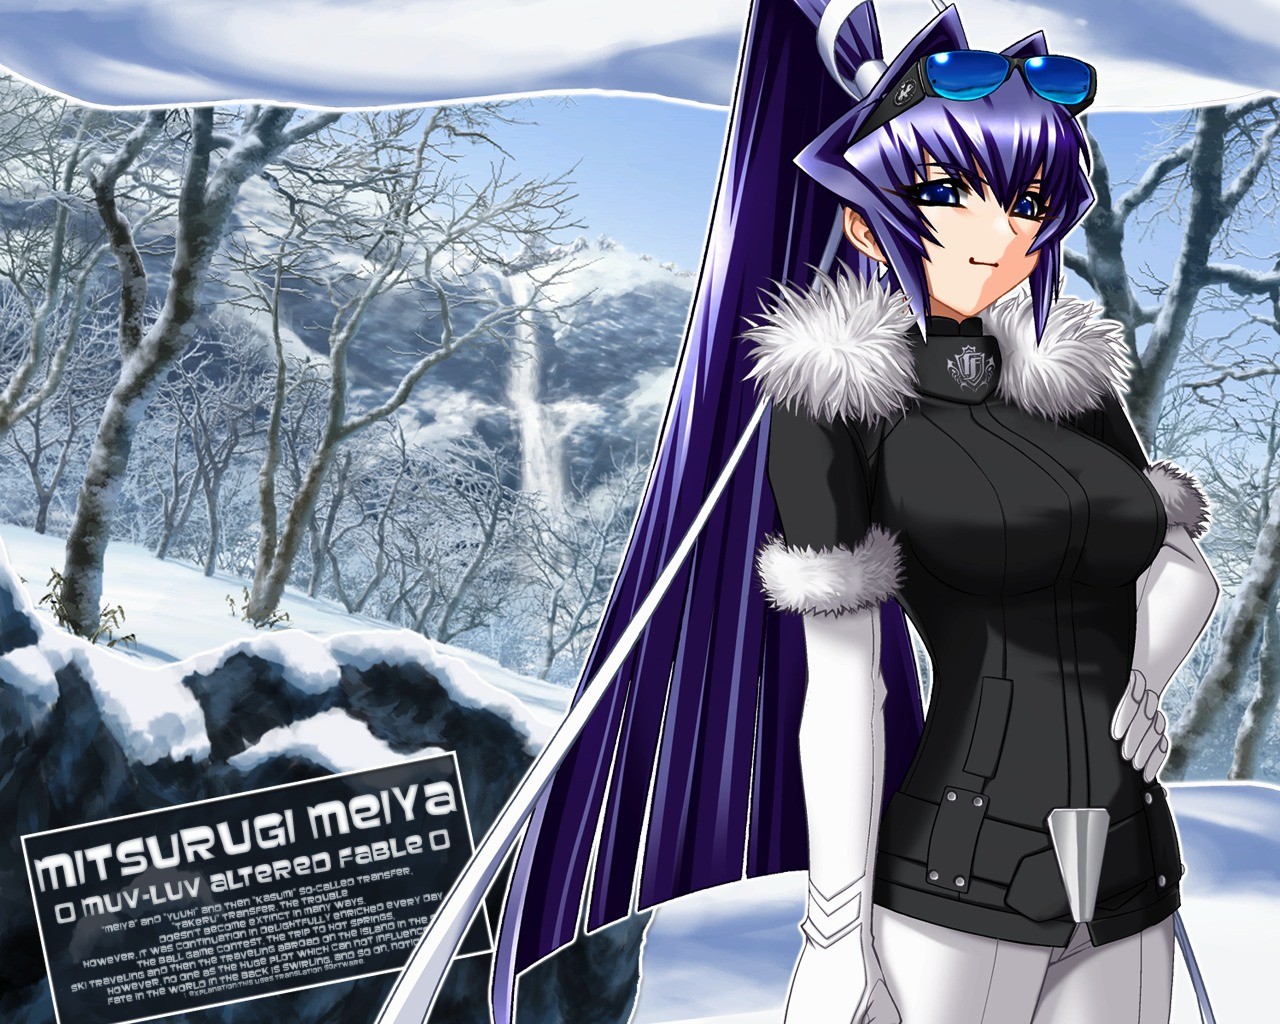 Anime 1280x1024 anime purple Muv-Luv anime girls purple hair winter trees snow blue eyes standing women with shades sunglasses